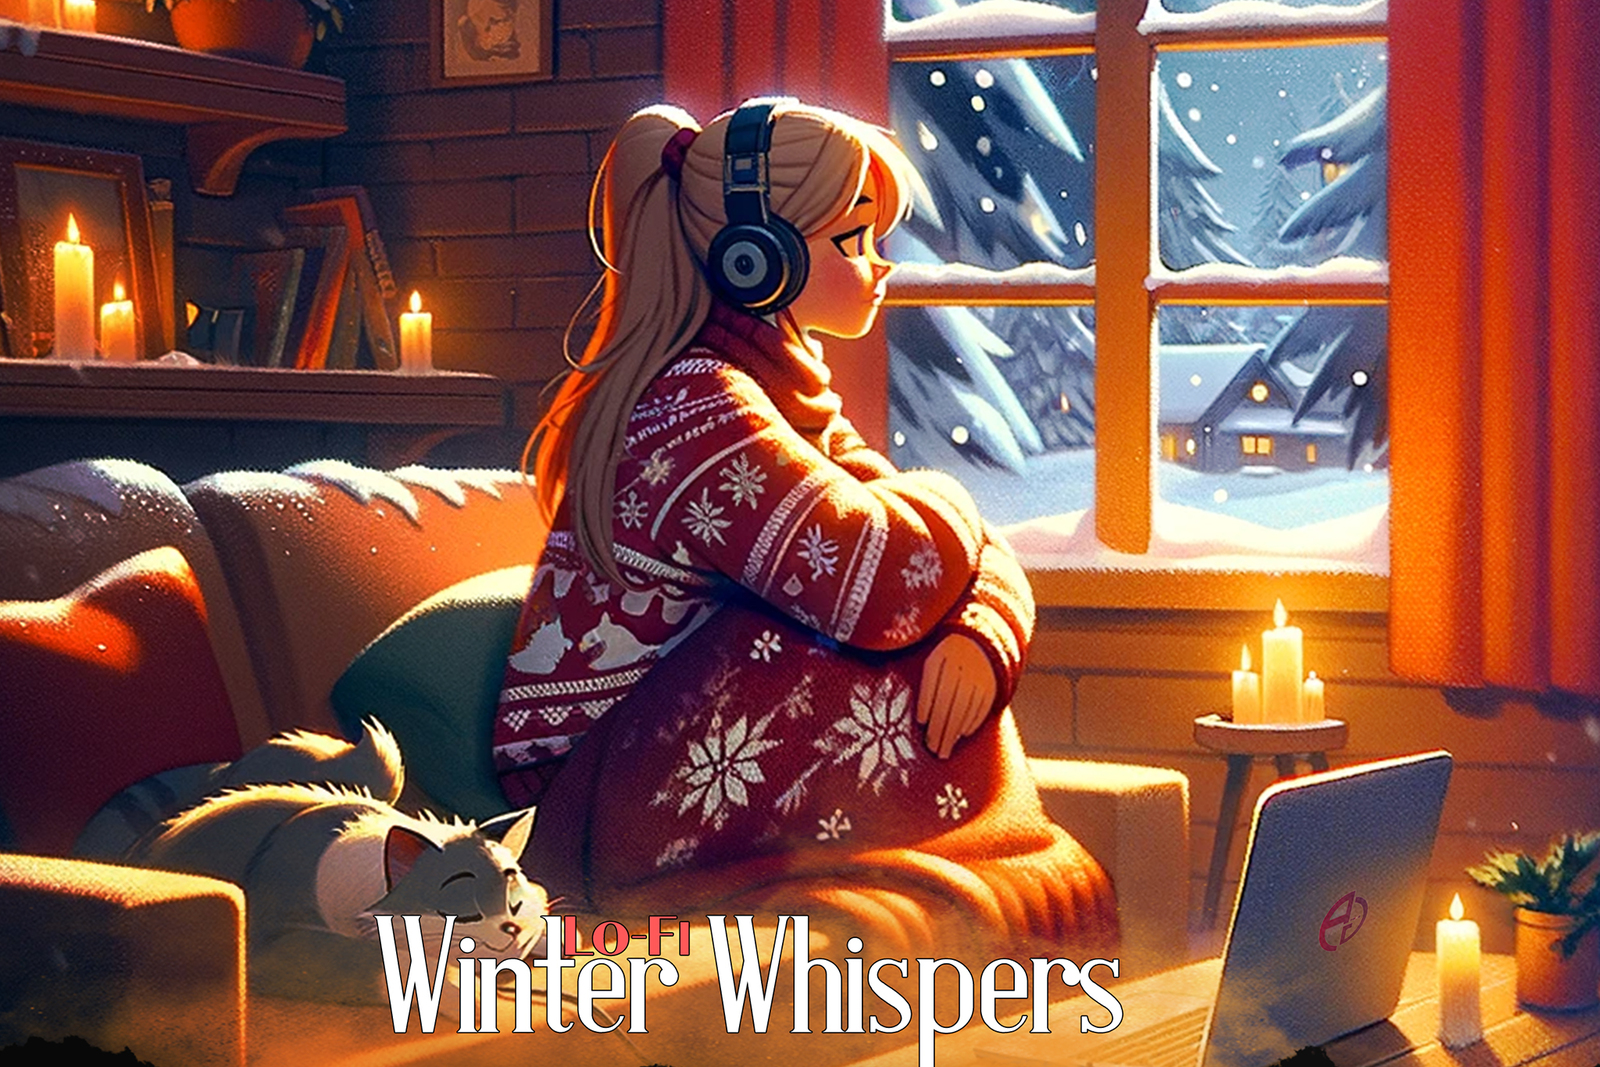 Sortie Imminente du Dernier Album de EDENE : "Winter Whispers Lo-fi"